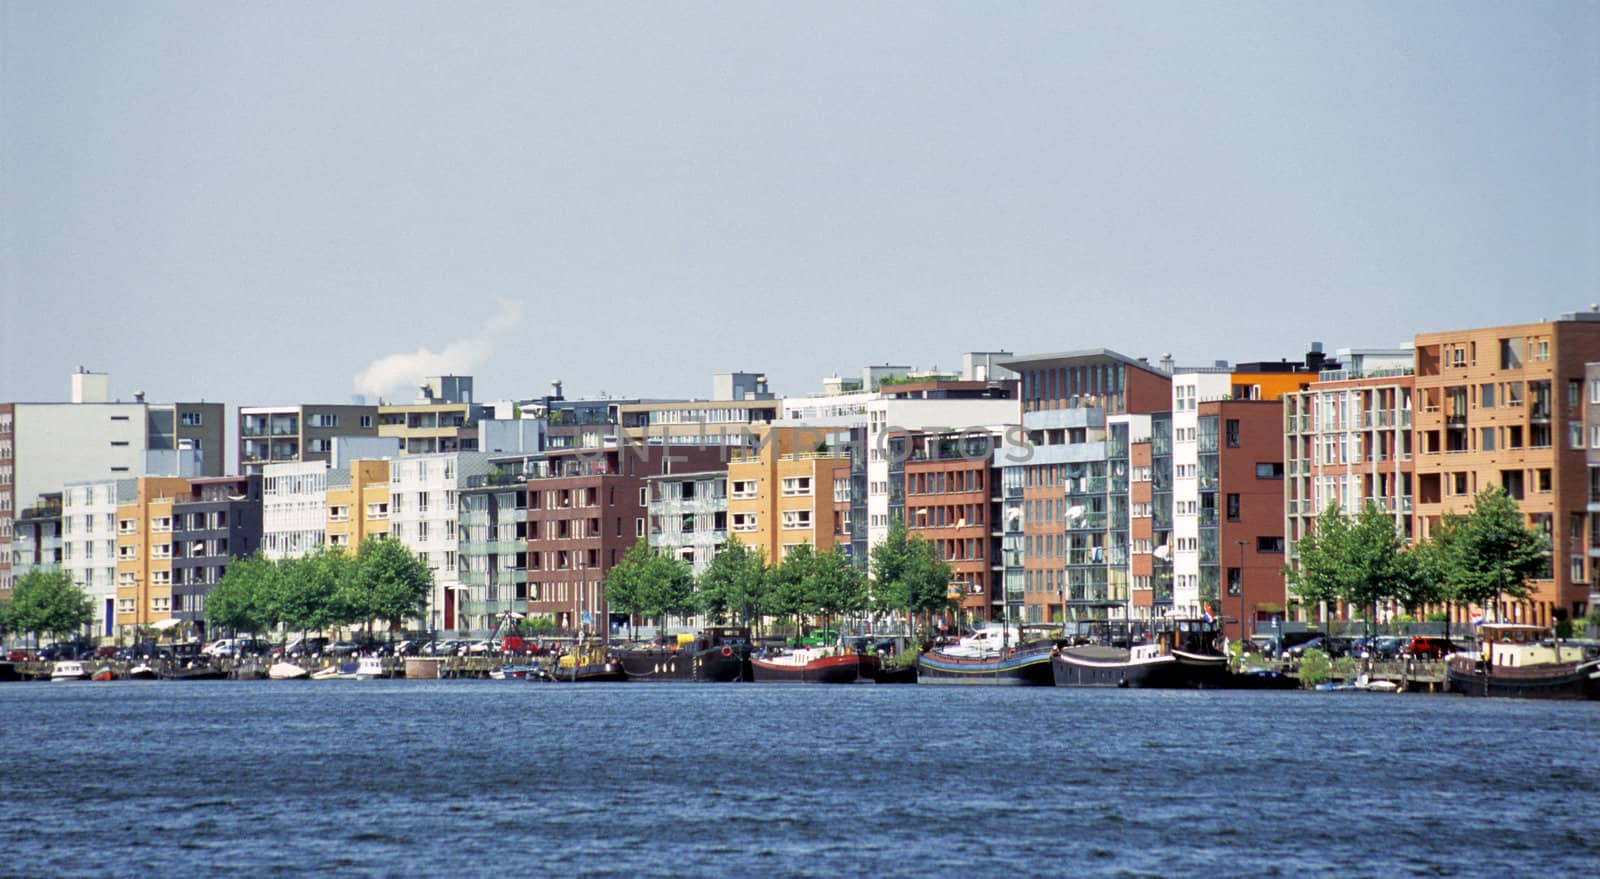 Java Island Amsterdam by ACMPhoto